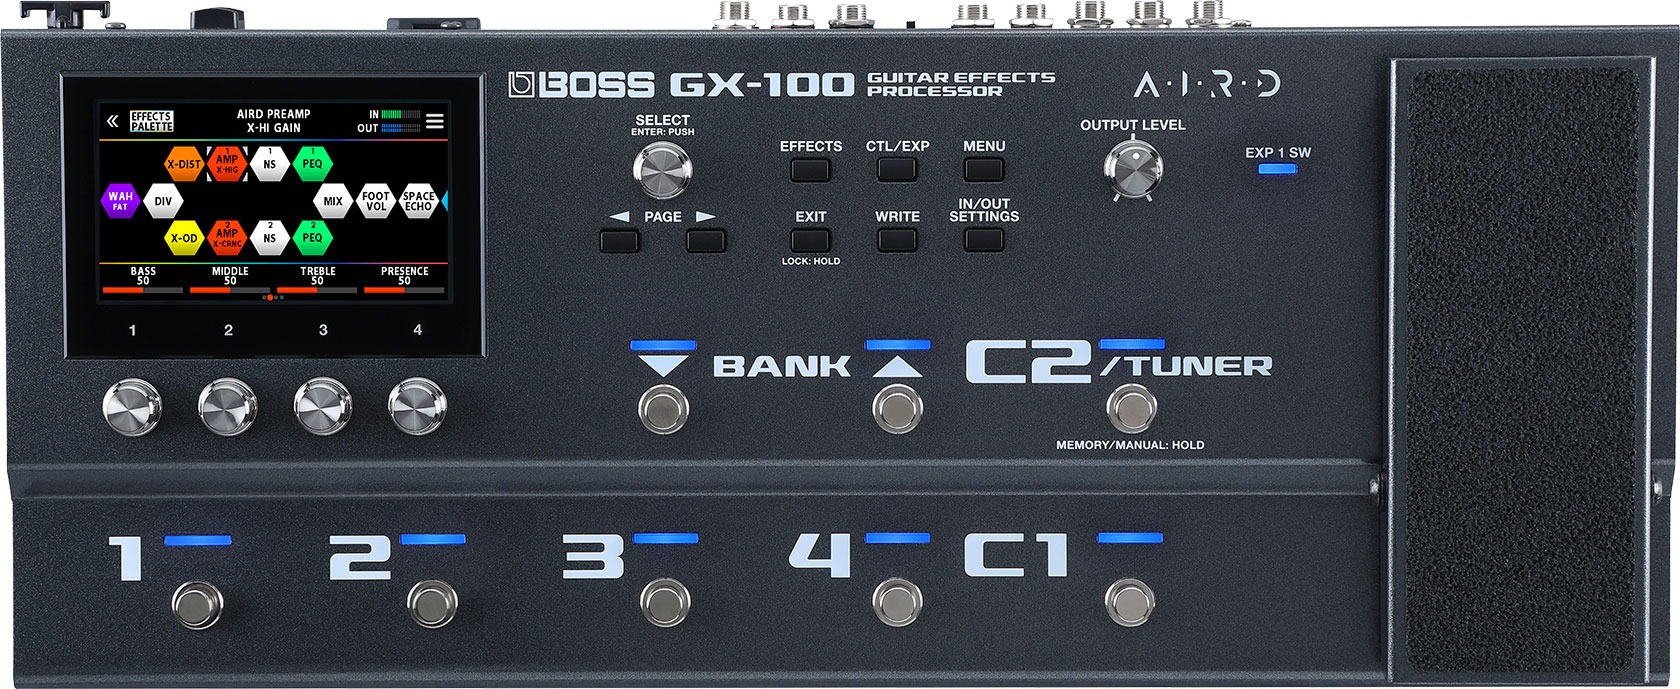 BOSS GX-100 レビュー【GT-1000違い比較】│楽器屋店員yoshguitarブログ